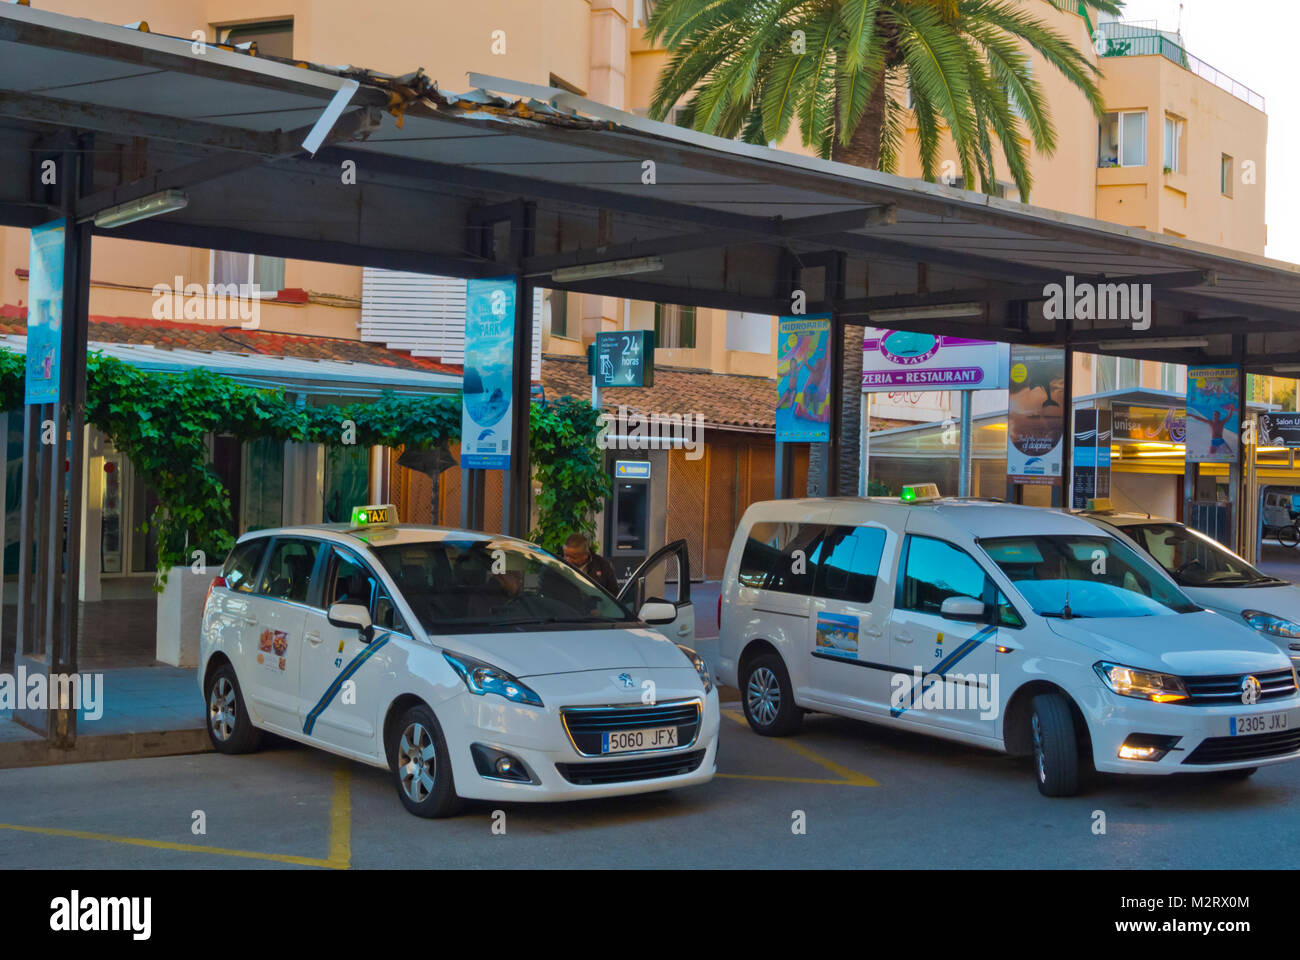 Taxi rank, Carretera d'Arte, Port d'Alcudia, Mallorca, Balearic islands,  Spain Stock Photo - Alamy